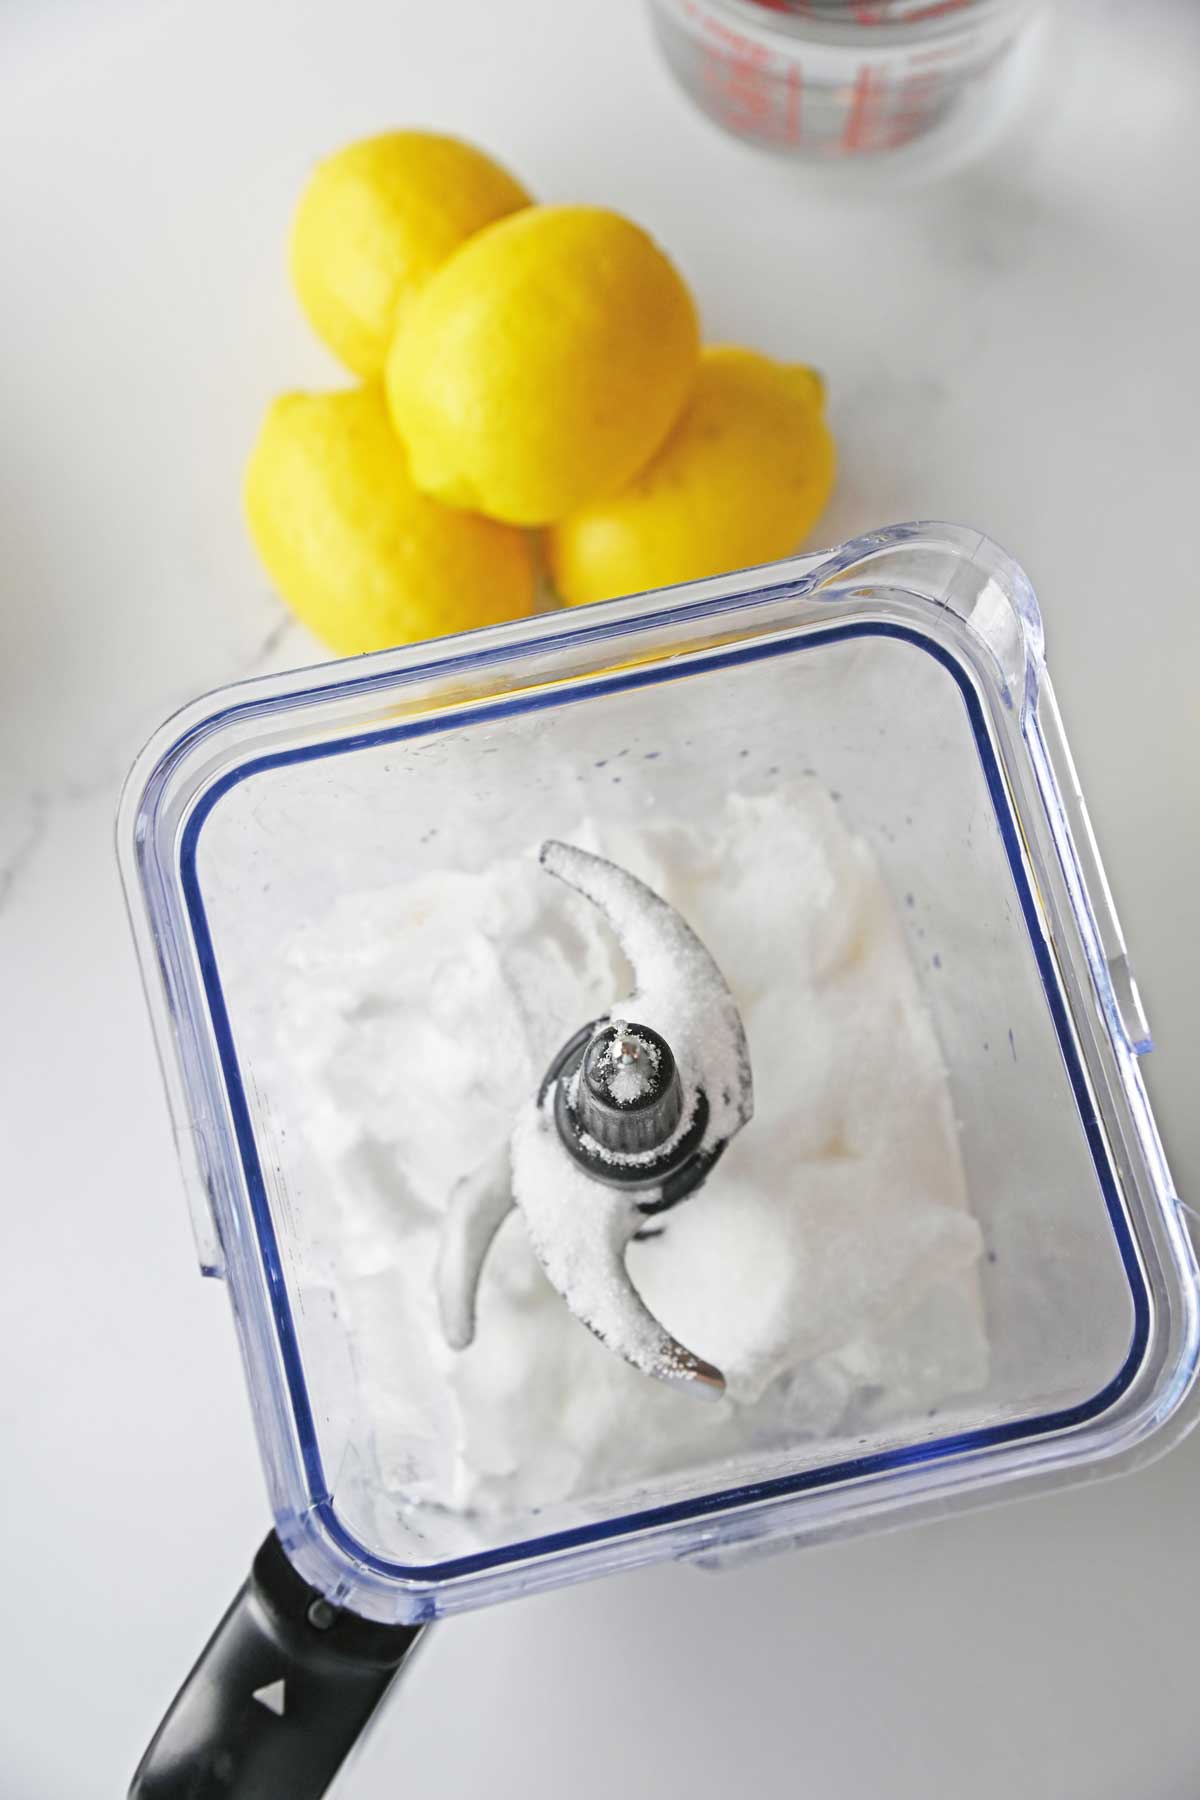 Next process in preparing Lemonade Slushie is to add a granulated sugar.